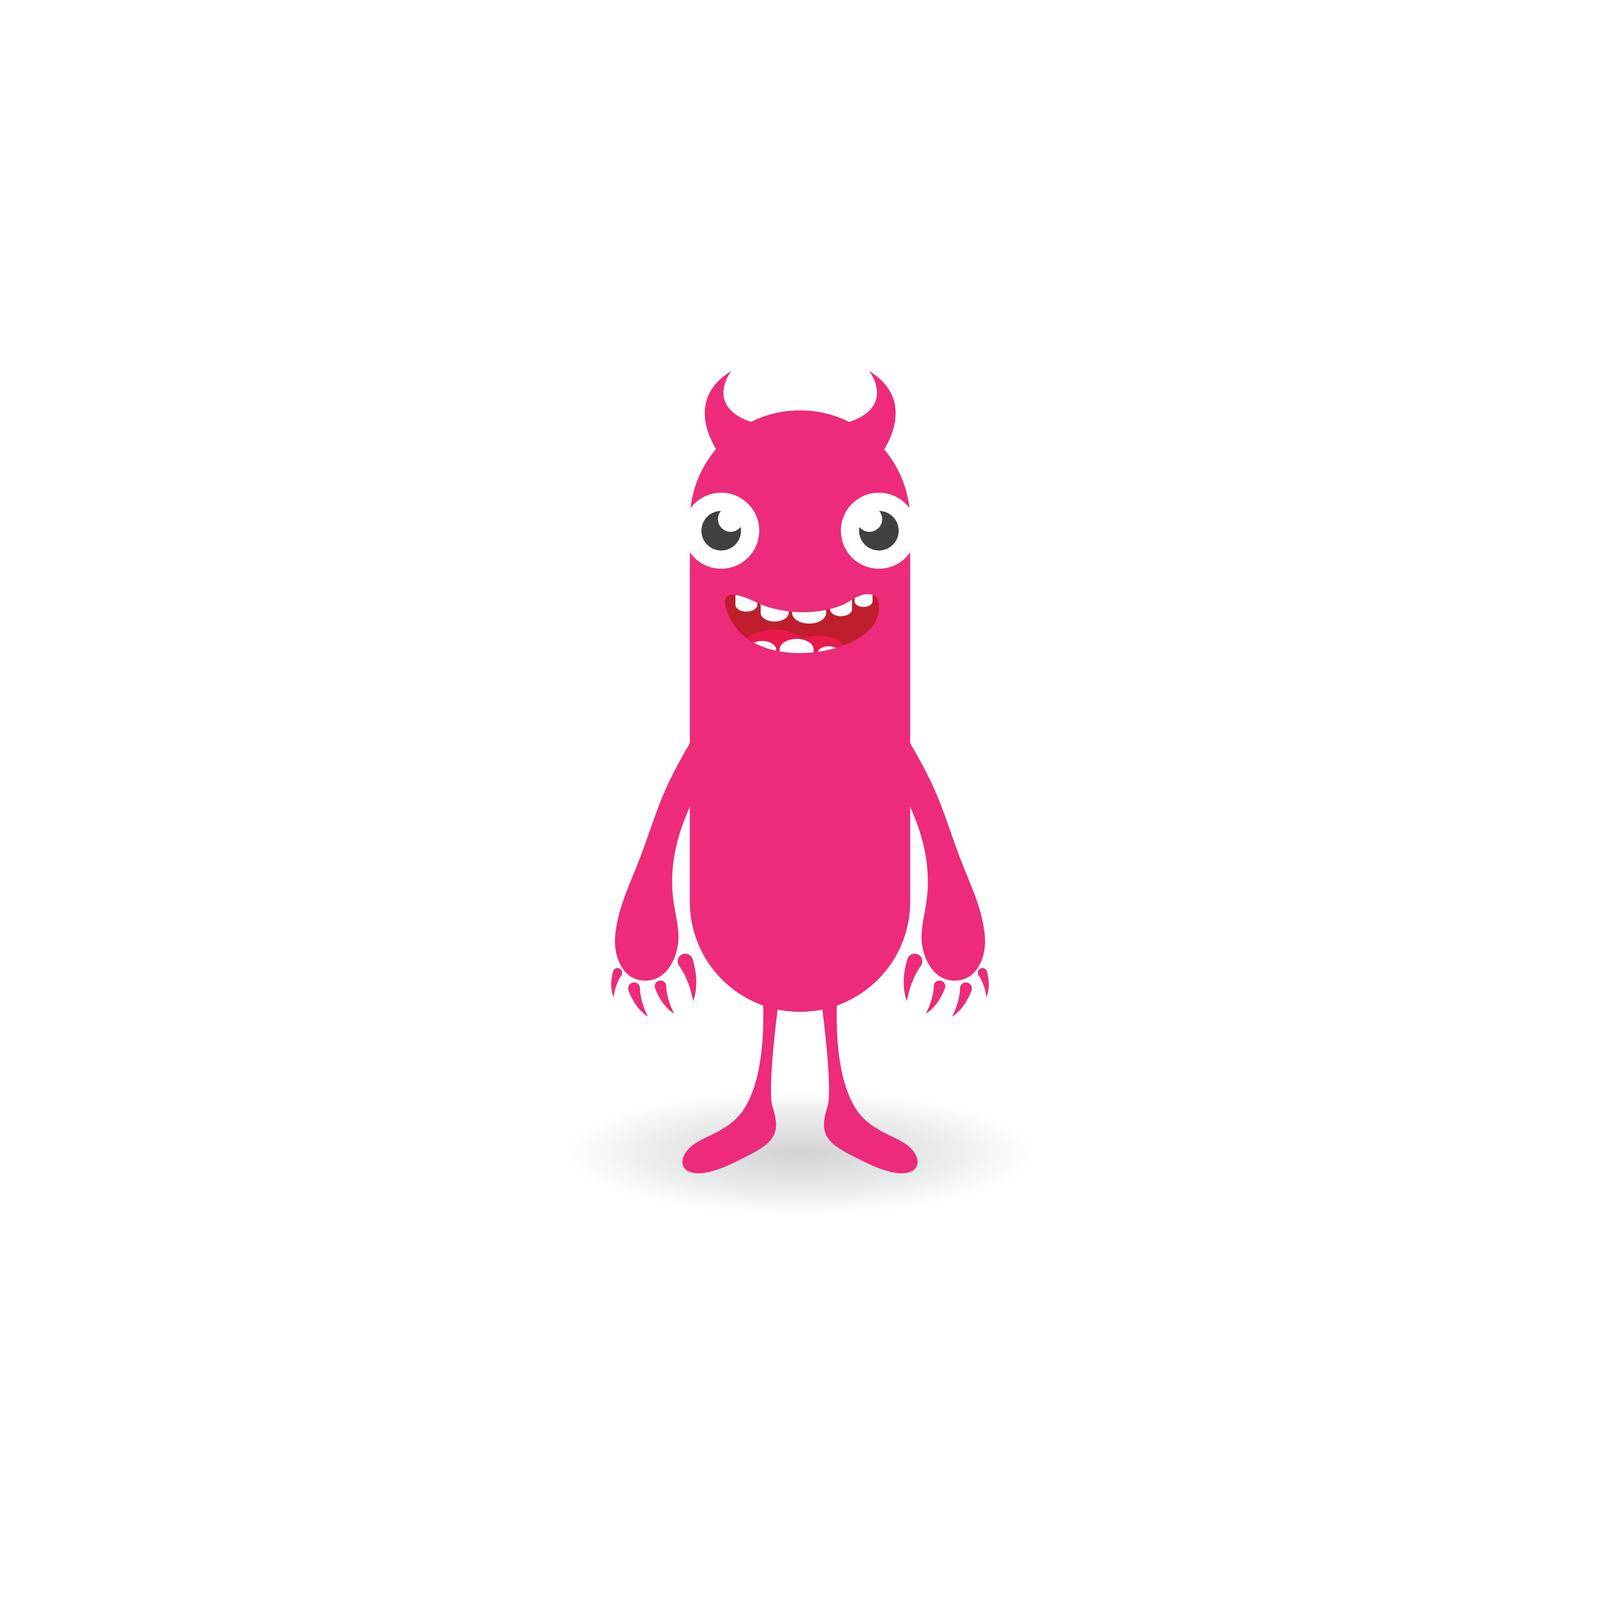 Monster cartoon character illustration vector design